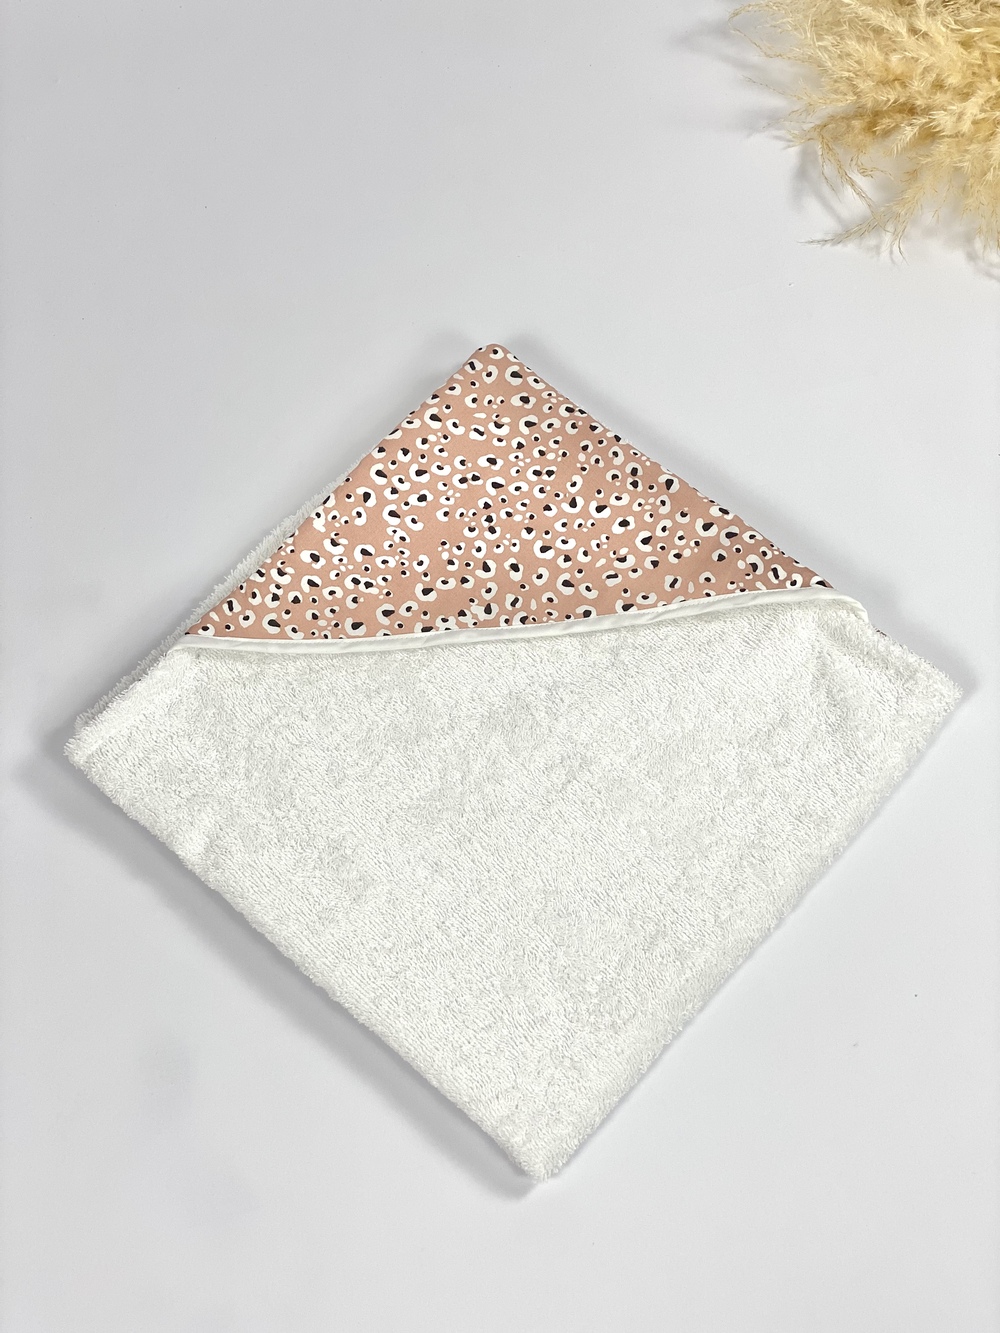 Animal Print baby hooded towel